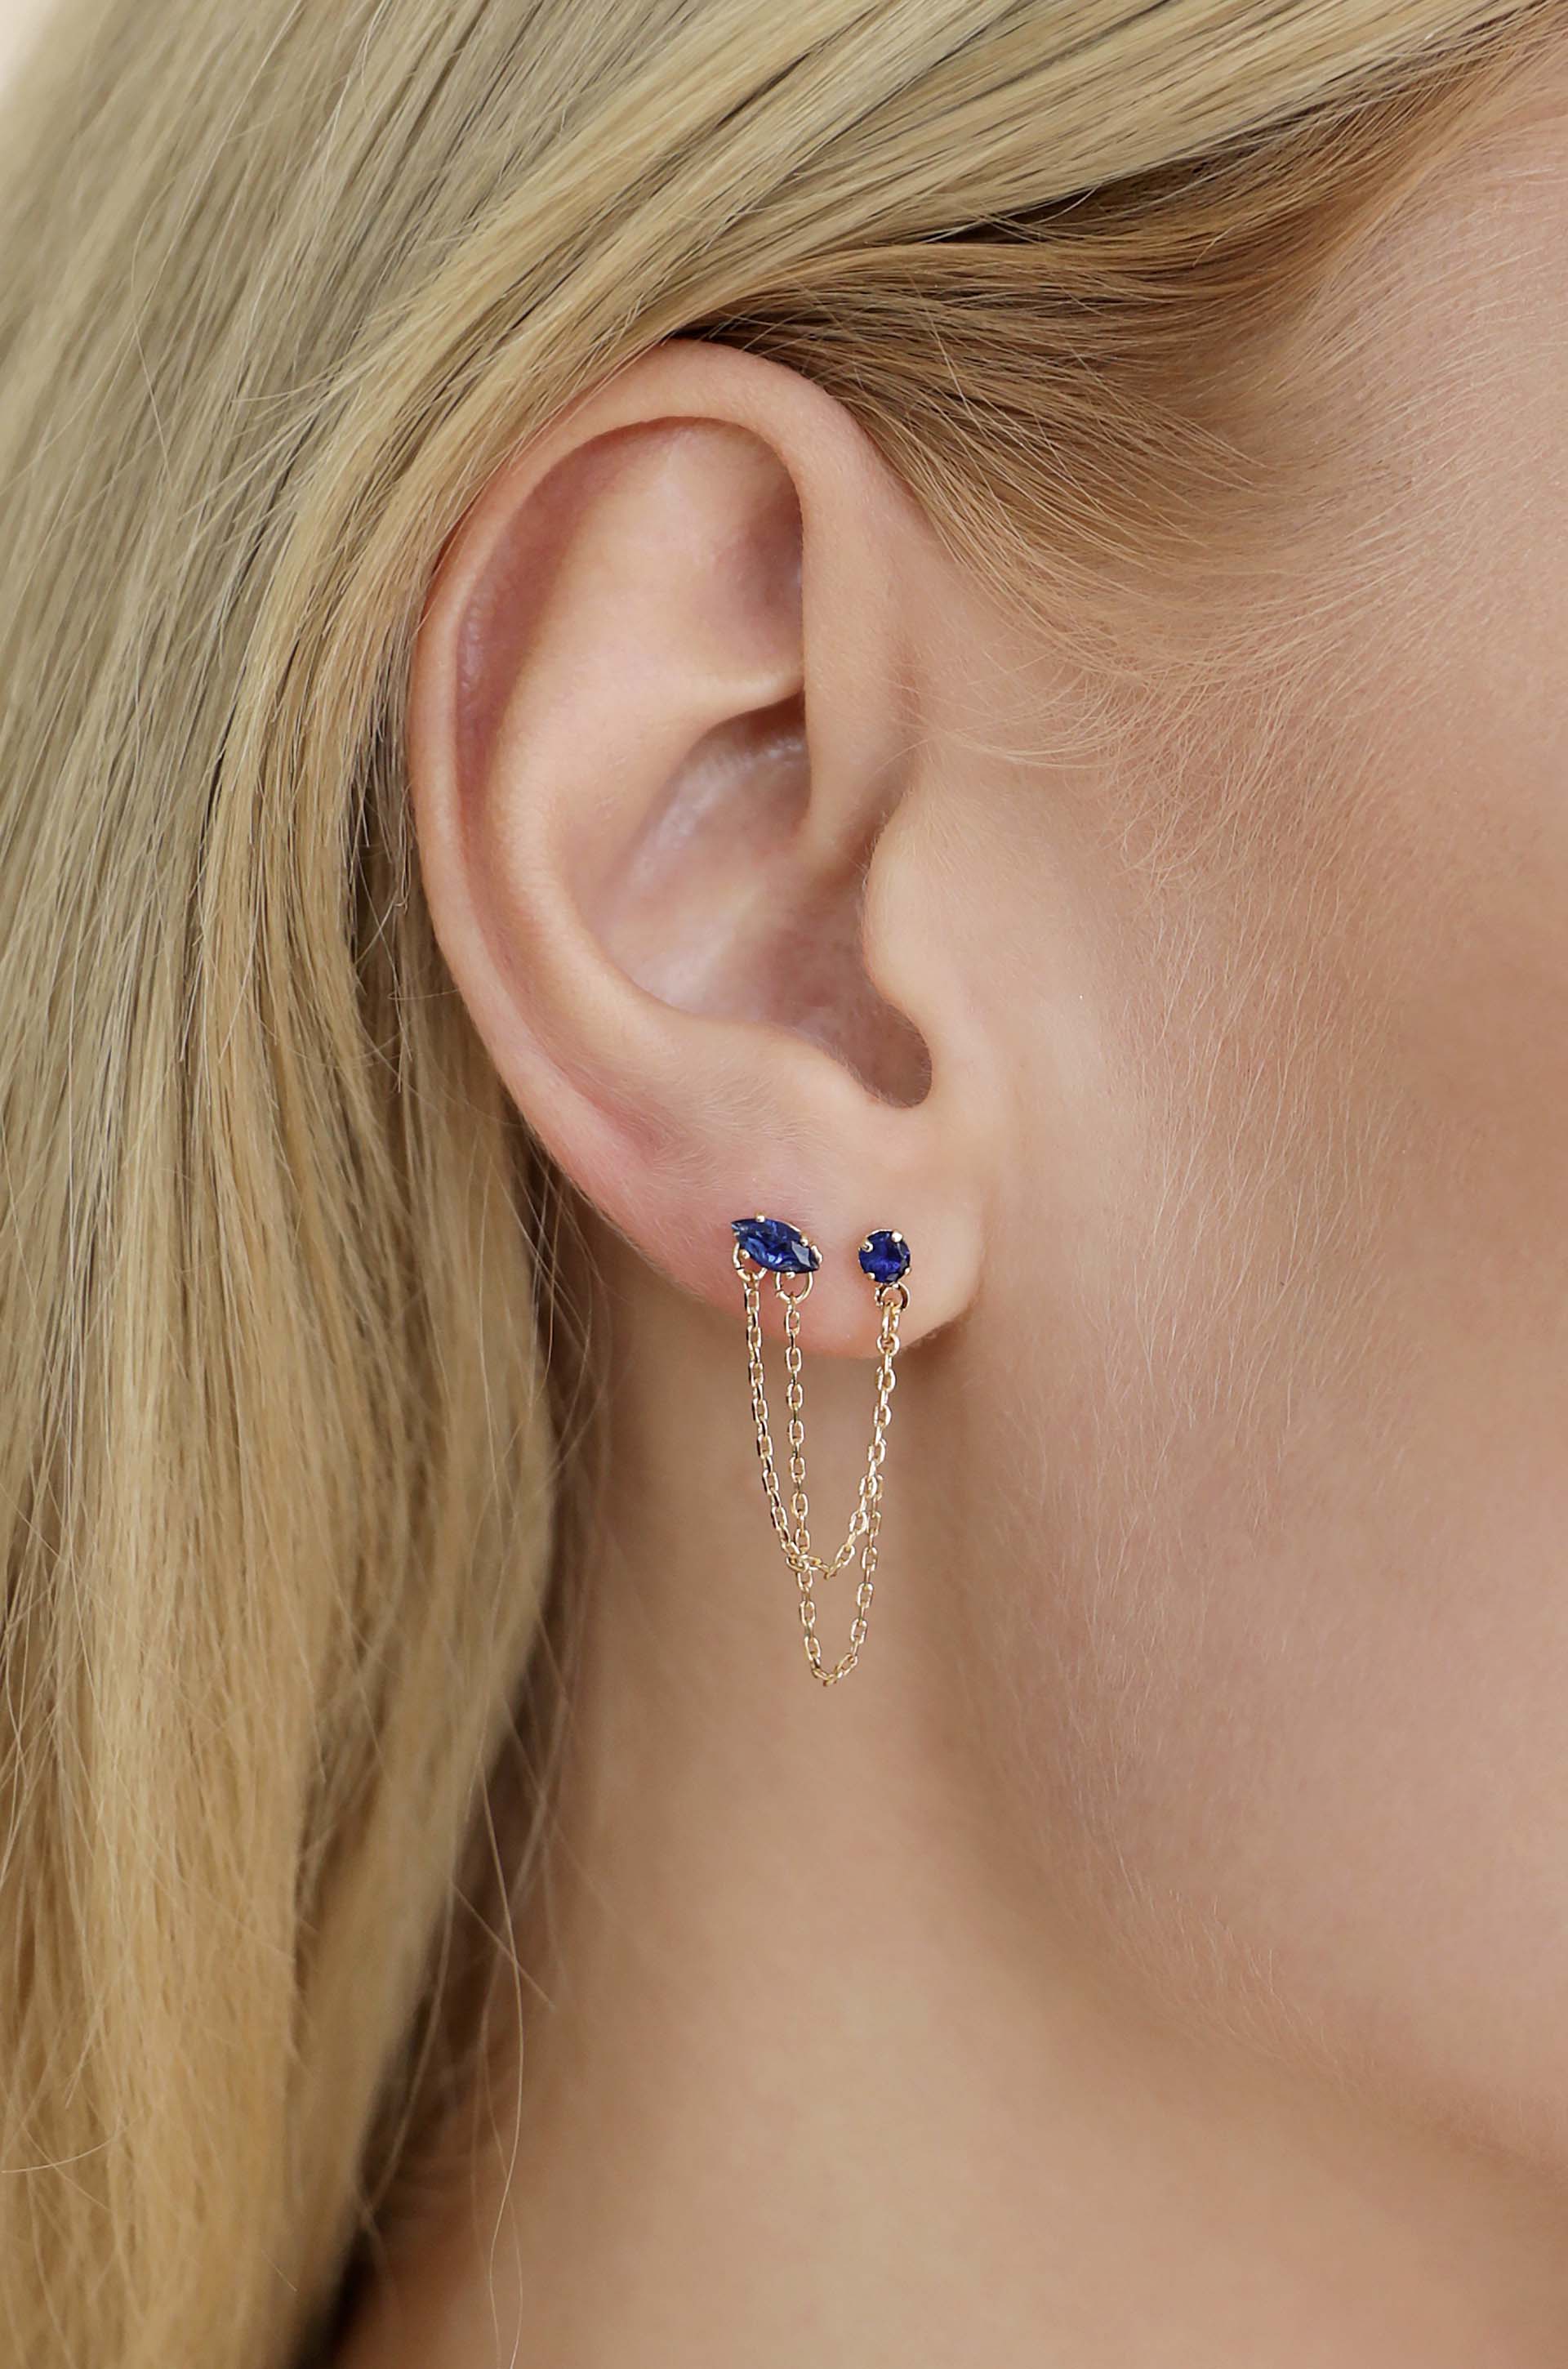 Double Piercing Earring Star and Moon Earrings Multiple Piercing Threader  Earrings 14k Gold Fill Ear Threads 